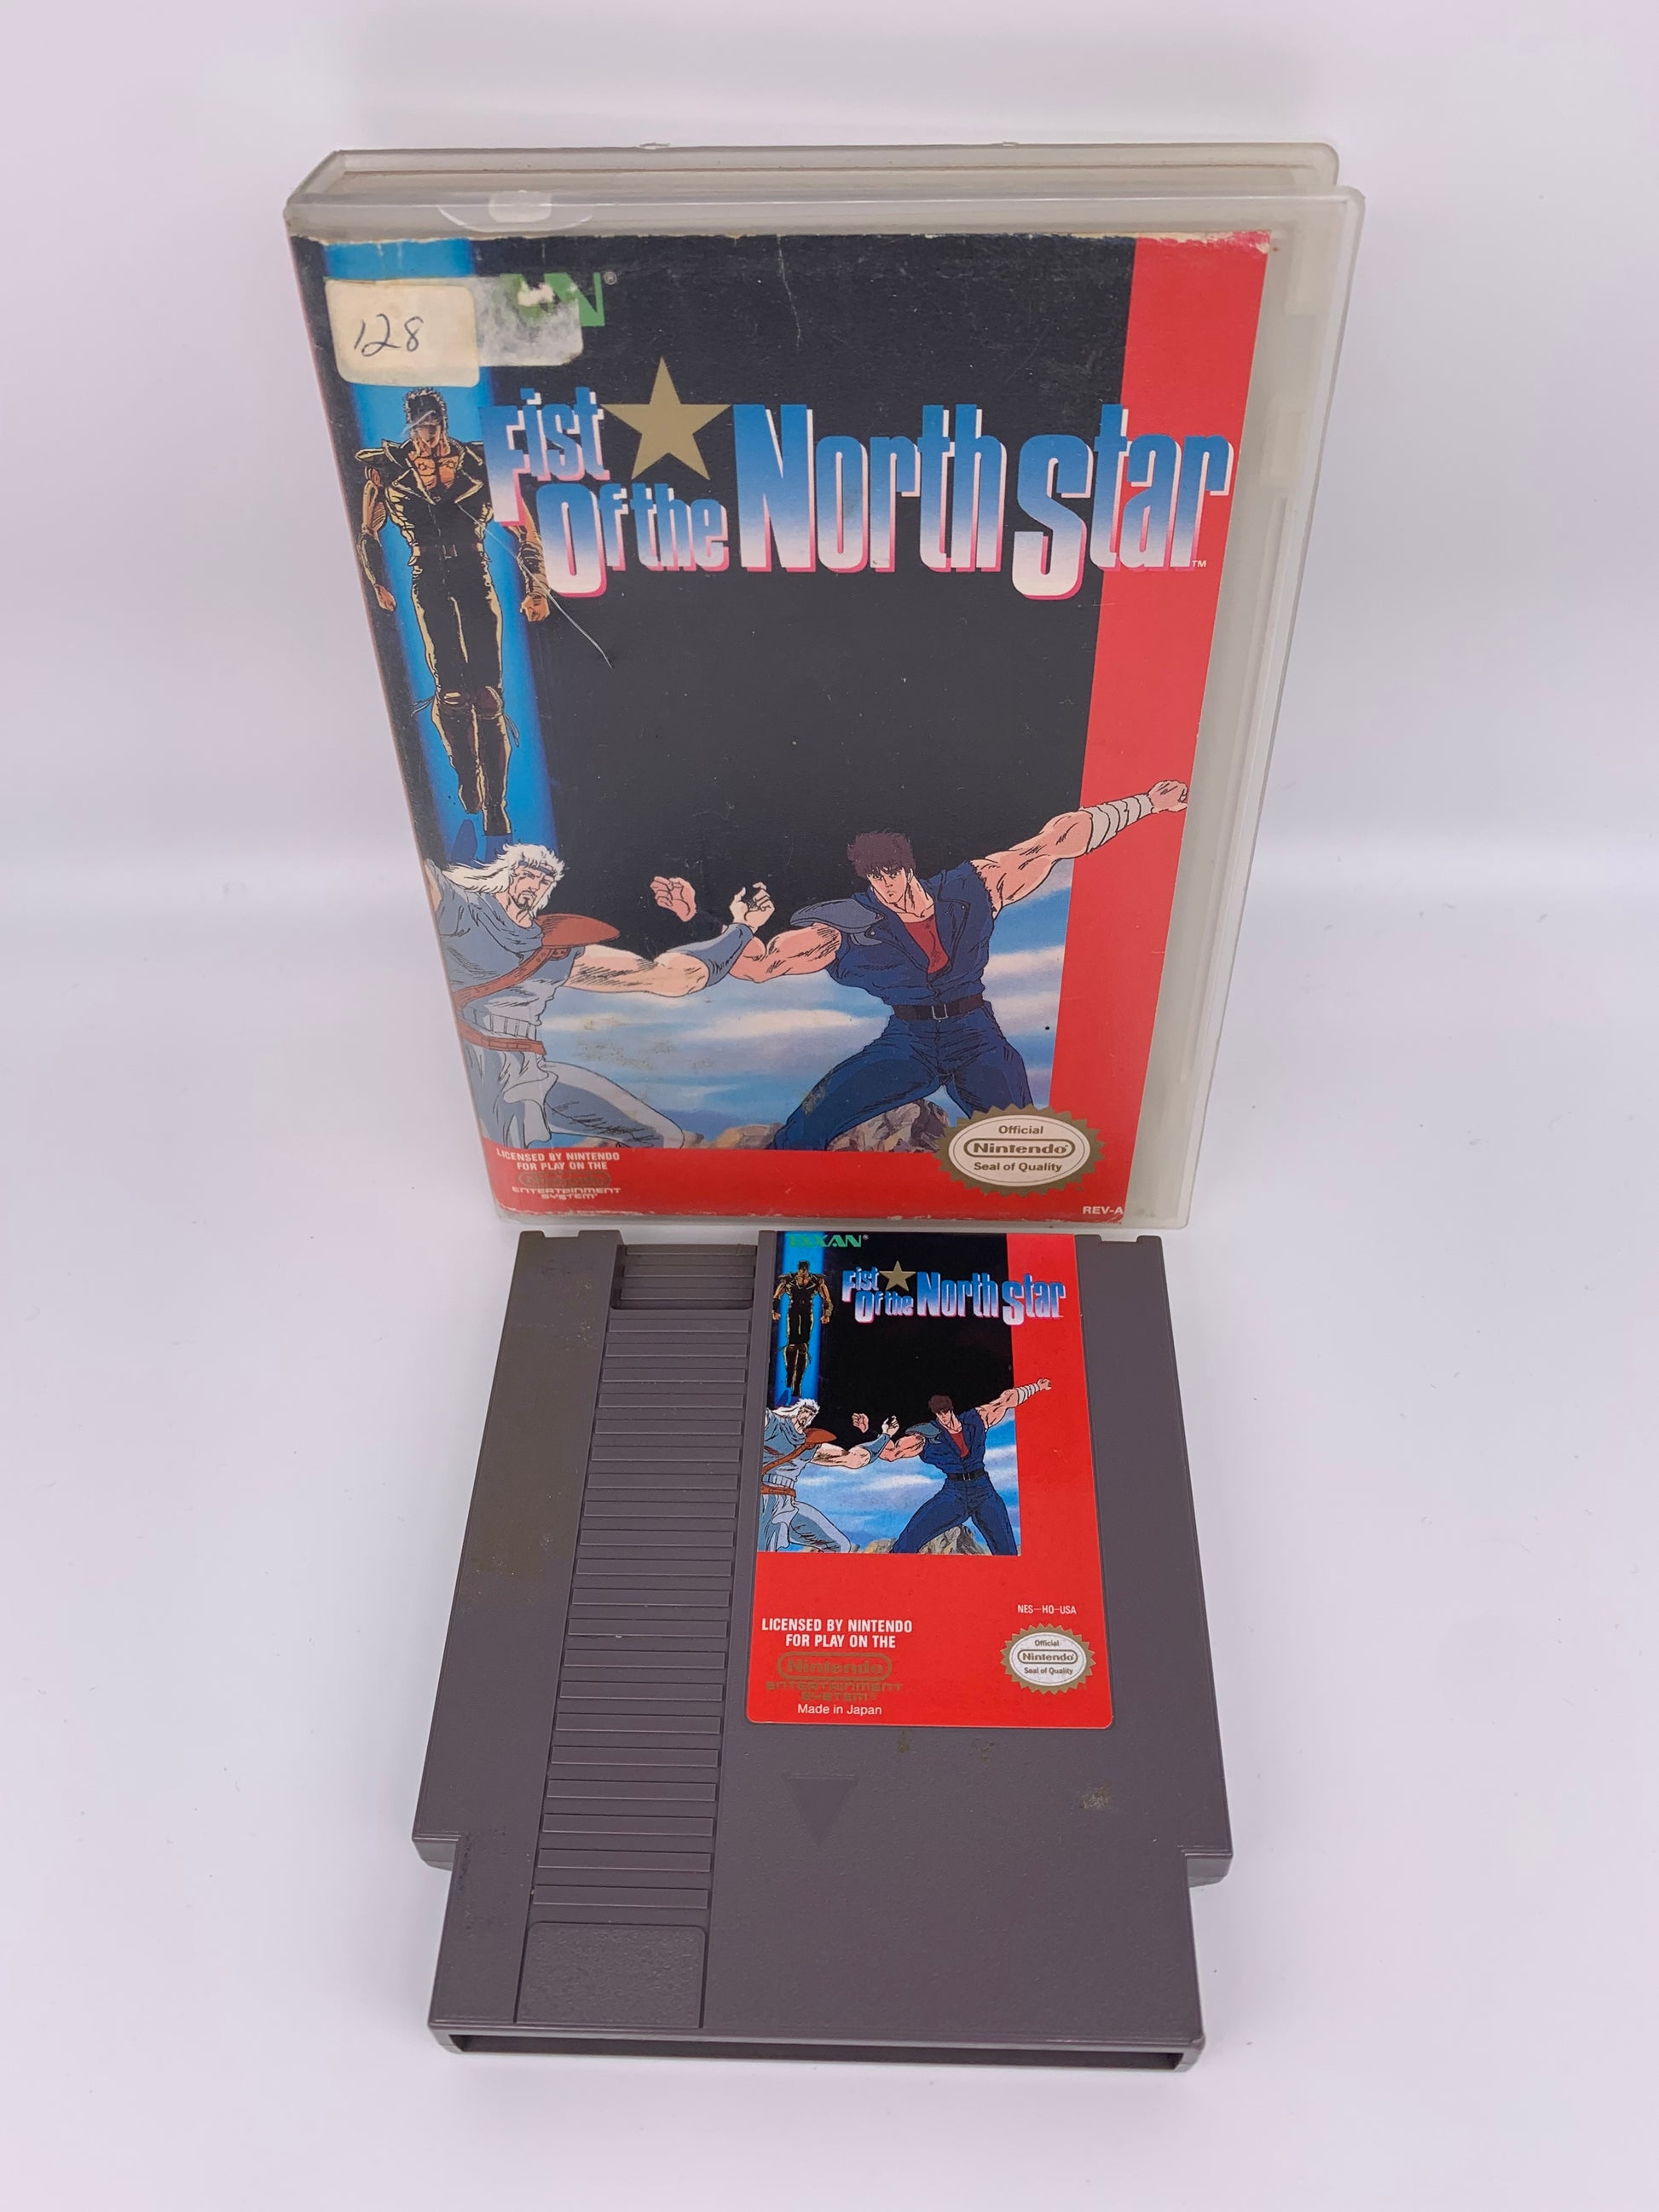 PiXEL-RETRO.COM : NINTENDO ENTERTAiNMENT SYSTEM (NES) GAME NTSC FIST OF THE NORTH STAR